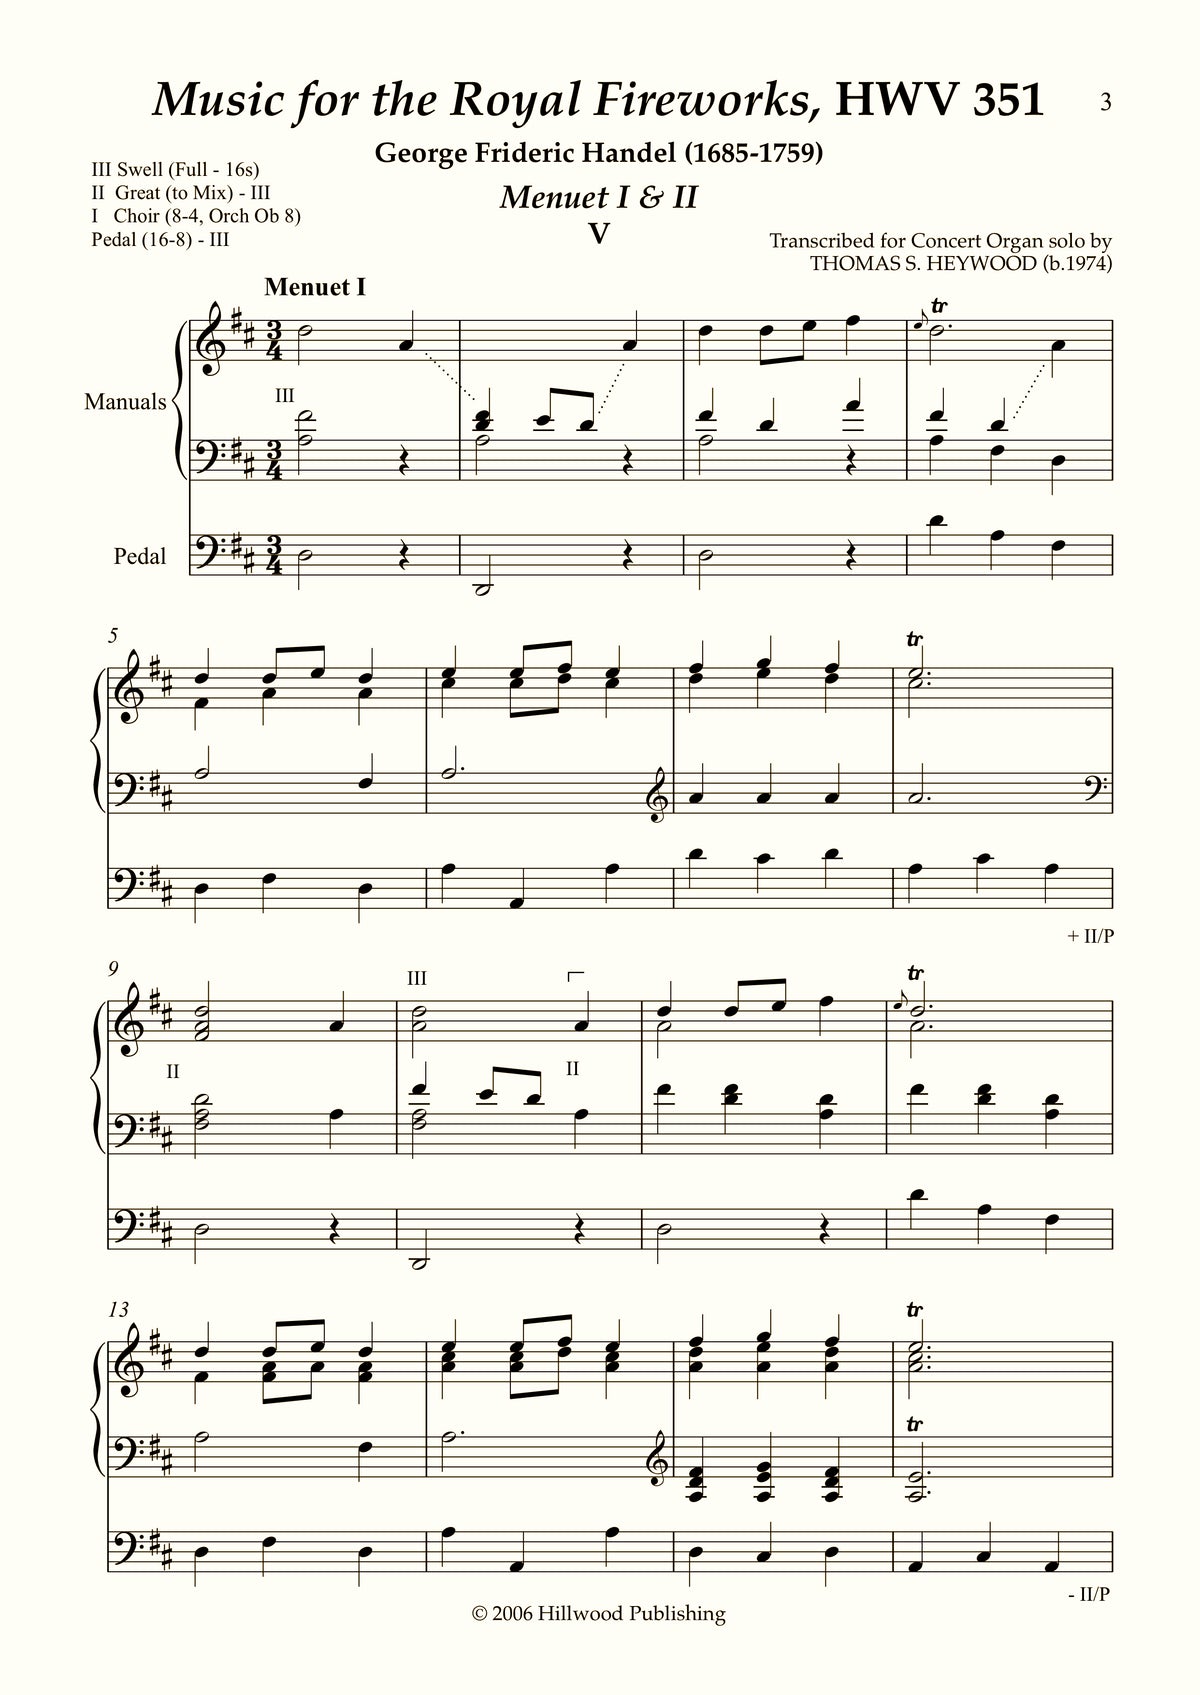 Handel/Heywood - Menuet I & II from Music for the Royal Fireworks, HWV 351 (Score) | Thomas Heywood | Concert Organ International